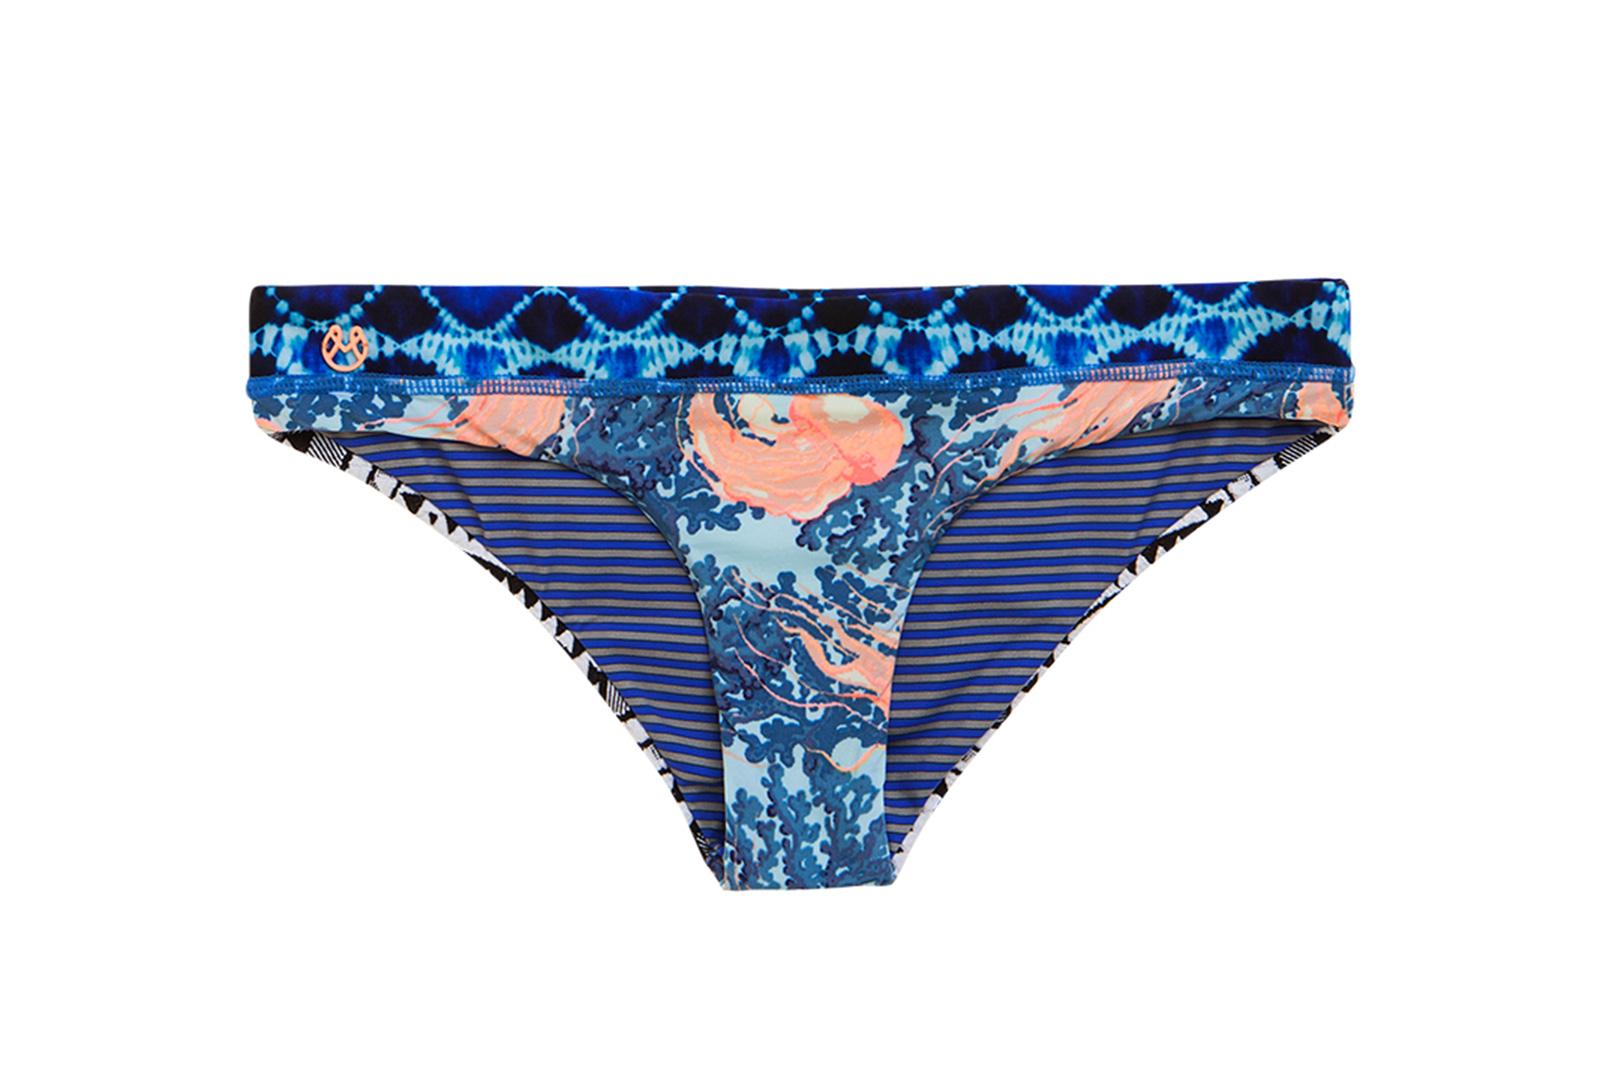 Maaji Swimsuit Bottom In Mixed Blue Prints - Calcinha Funky Jellies